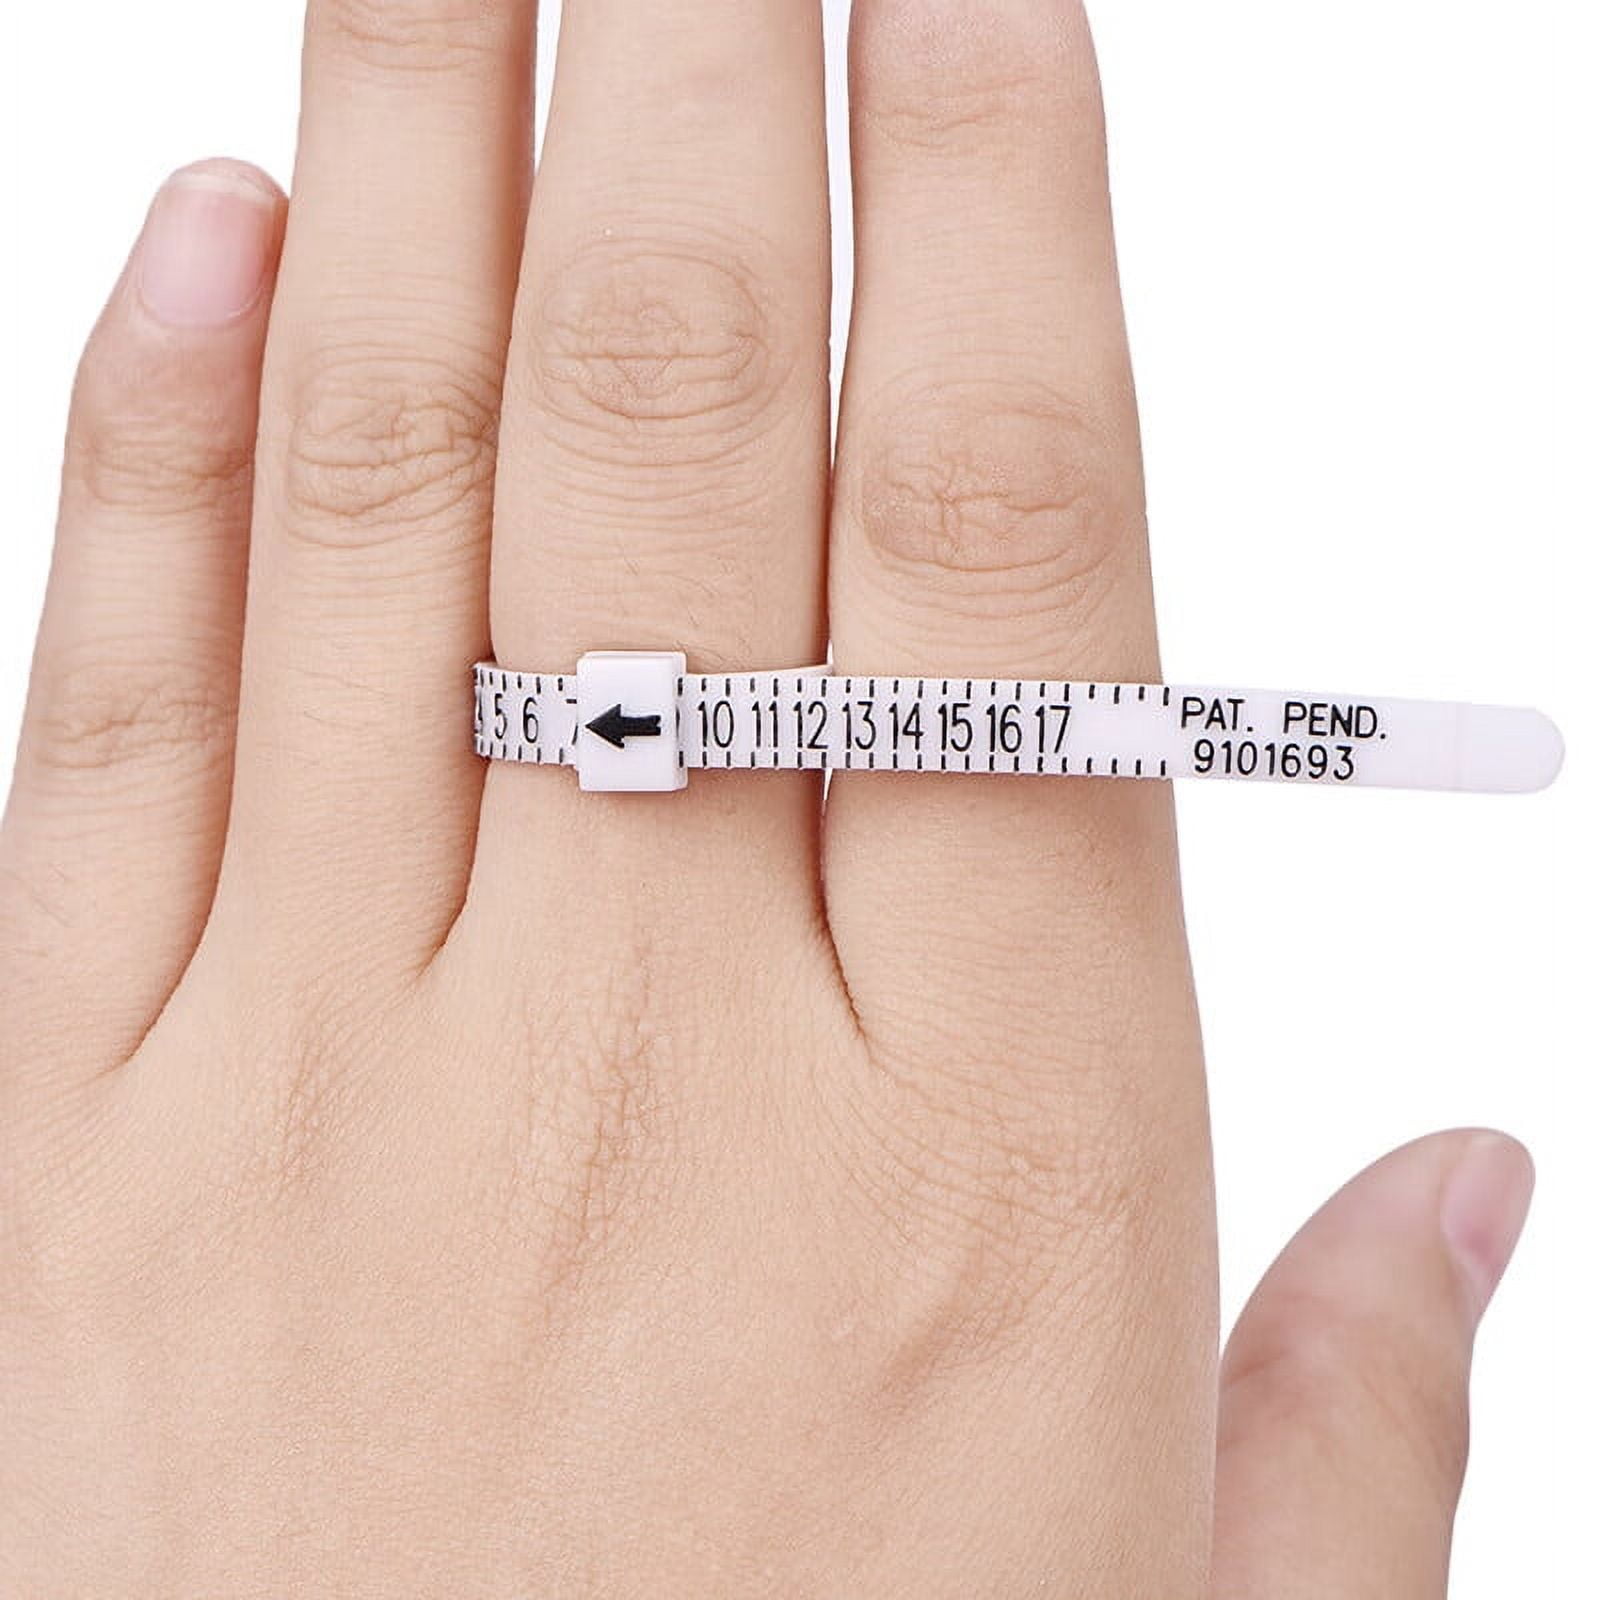 Men and Womens British/American UK/US/EU/JP Sizes A-Z Ring Sizer Measure  Genuine Tester Finger Gauge Wedding Ring Band WHITE EU 